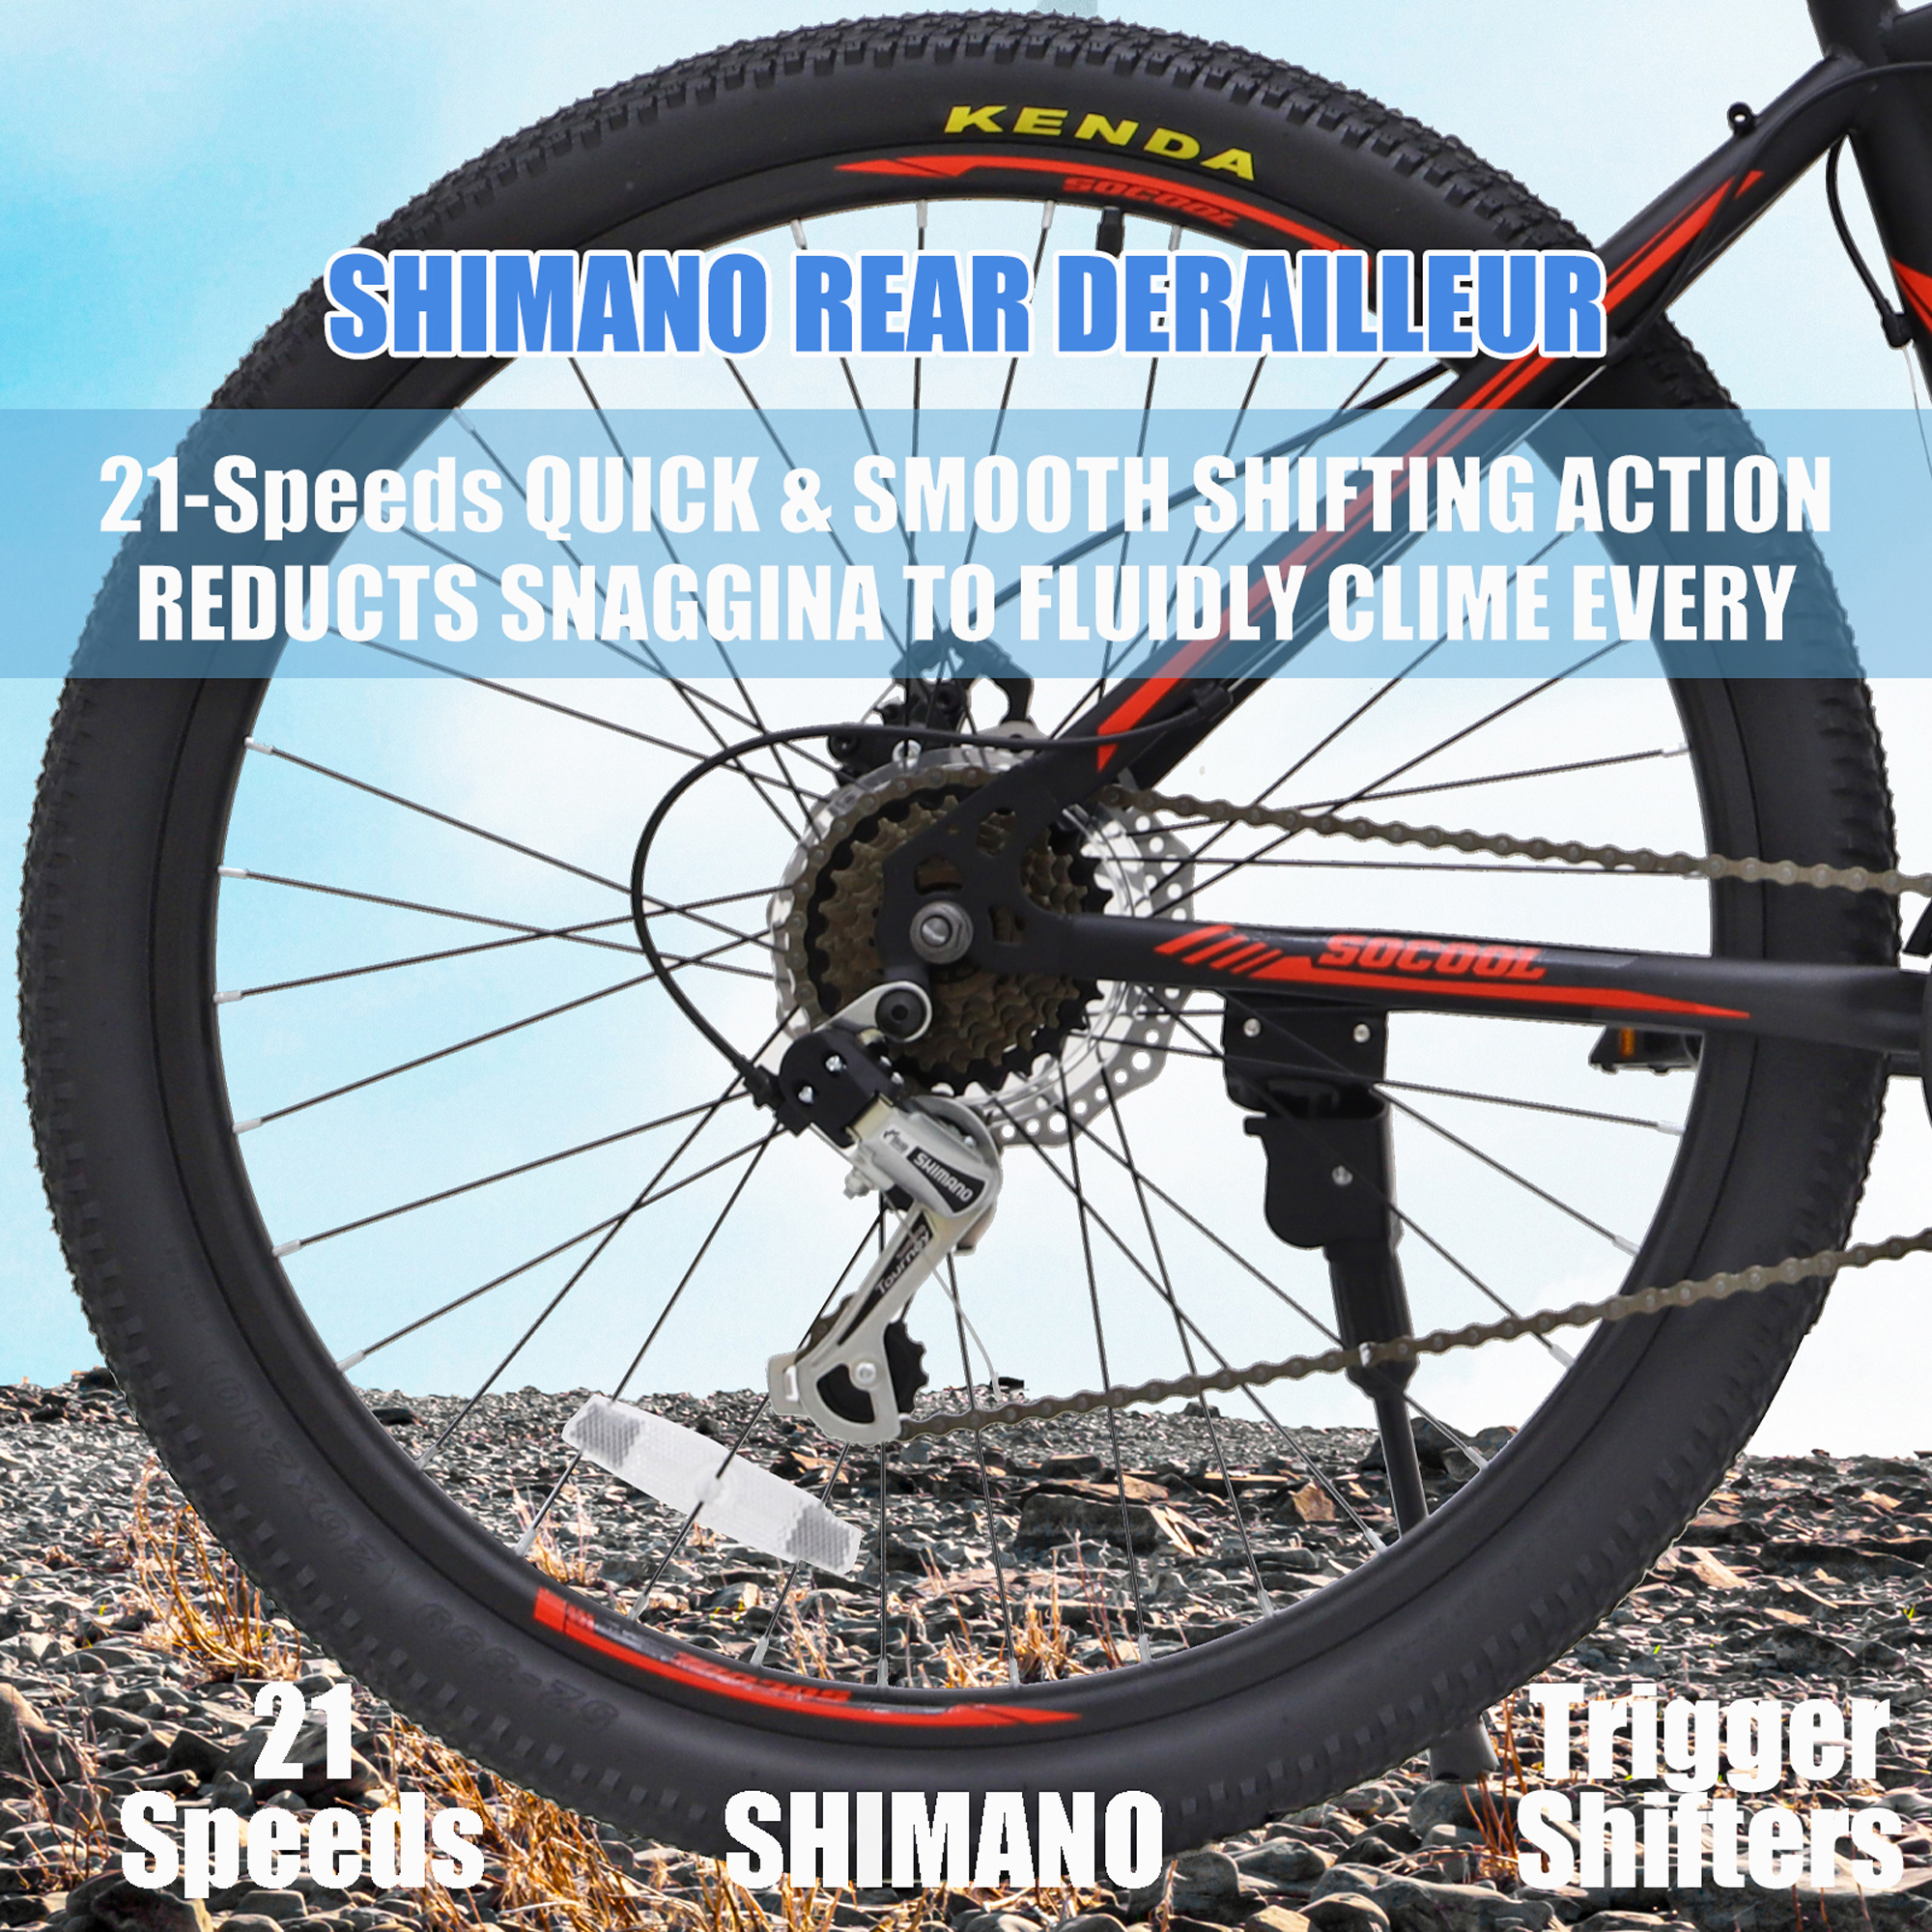 SOCOOL Mens and Womens Road Bike, 26-Inch Wheels, Lightweight Aluminum Frame -Orange & Black, ZA454BK - image 4 of 9